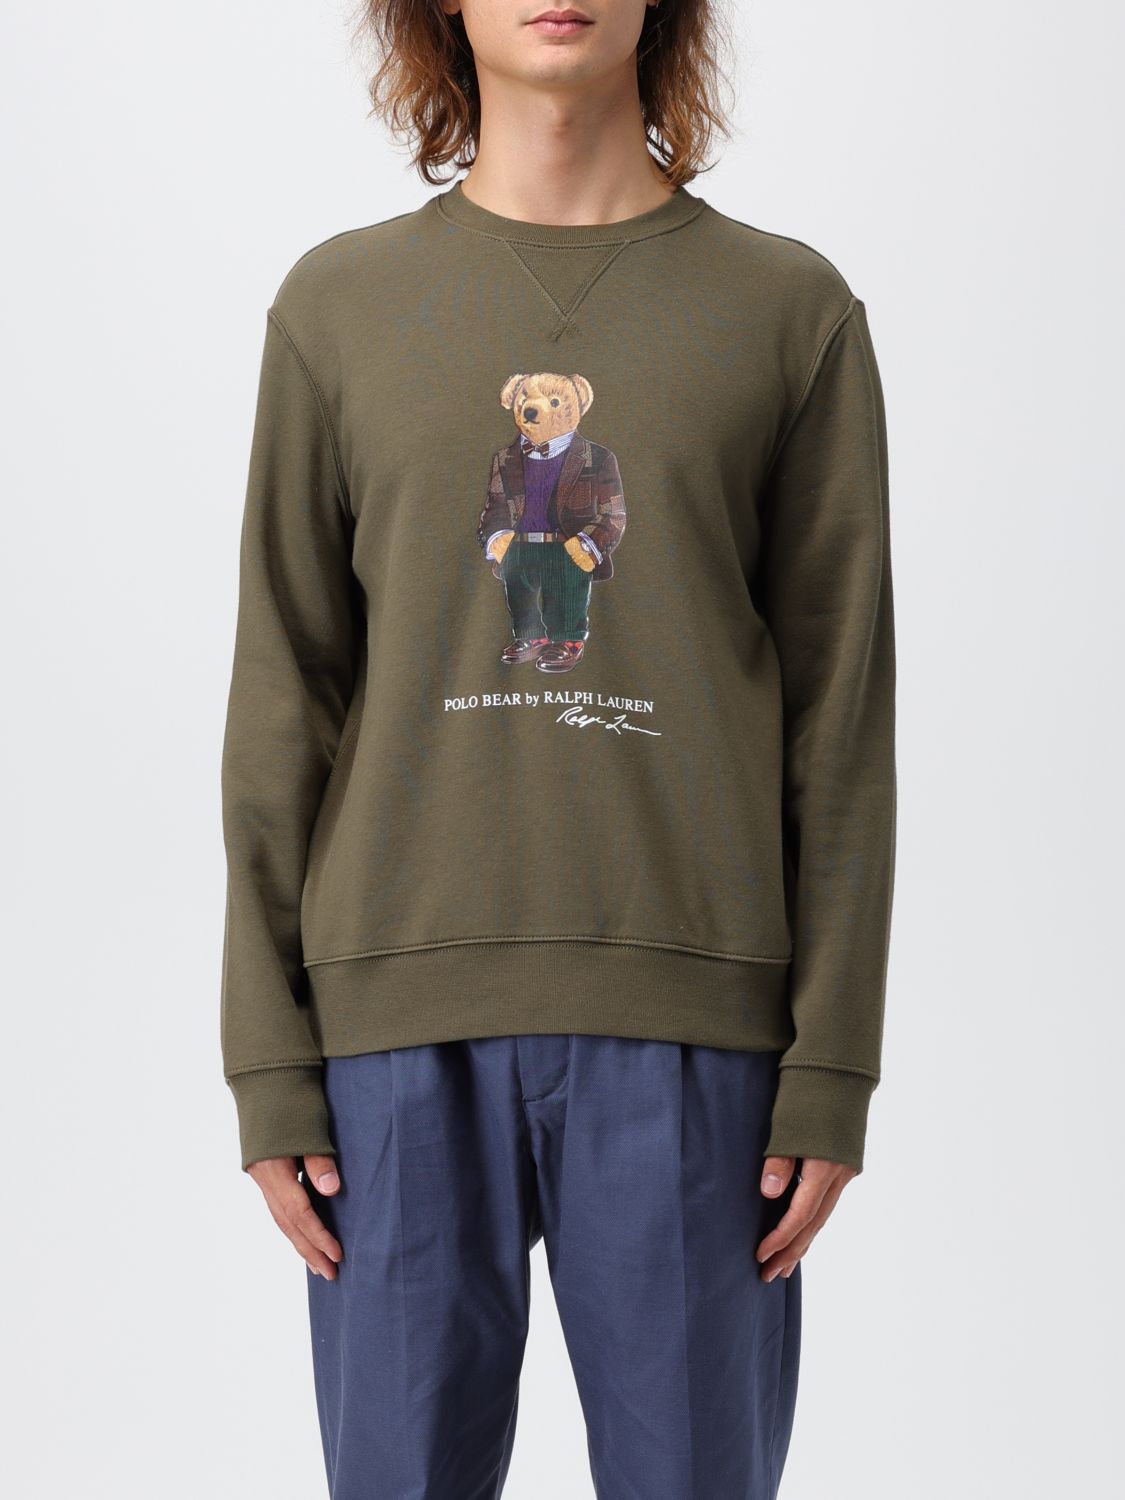 Polo Bear By Ralph Lauren Tweed Bear Sweatshirt